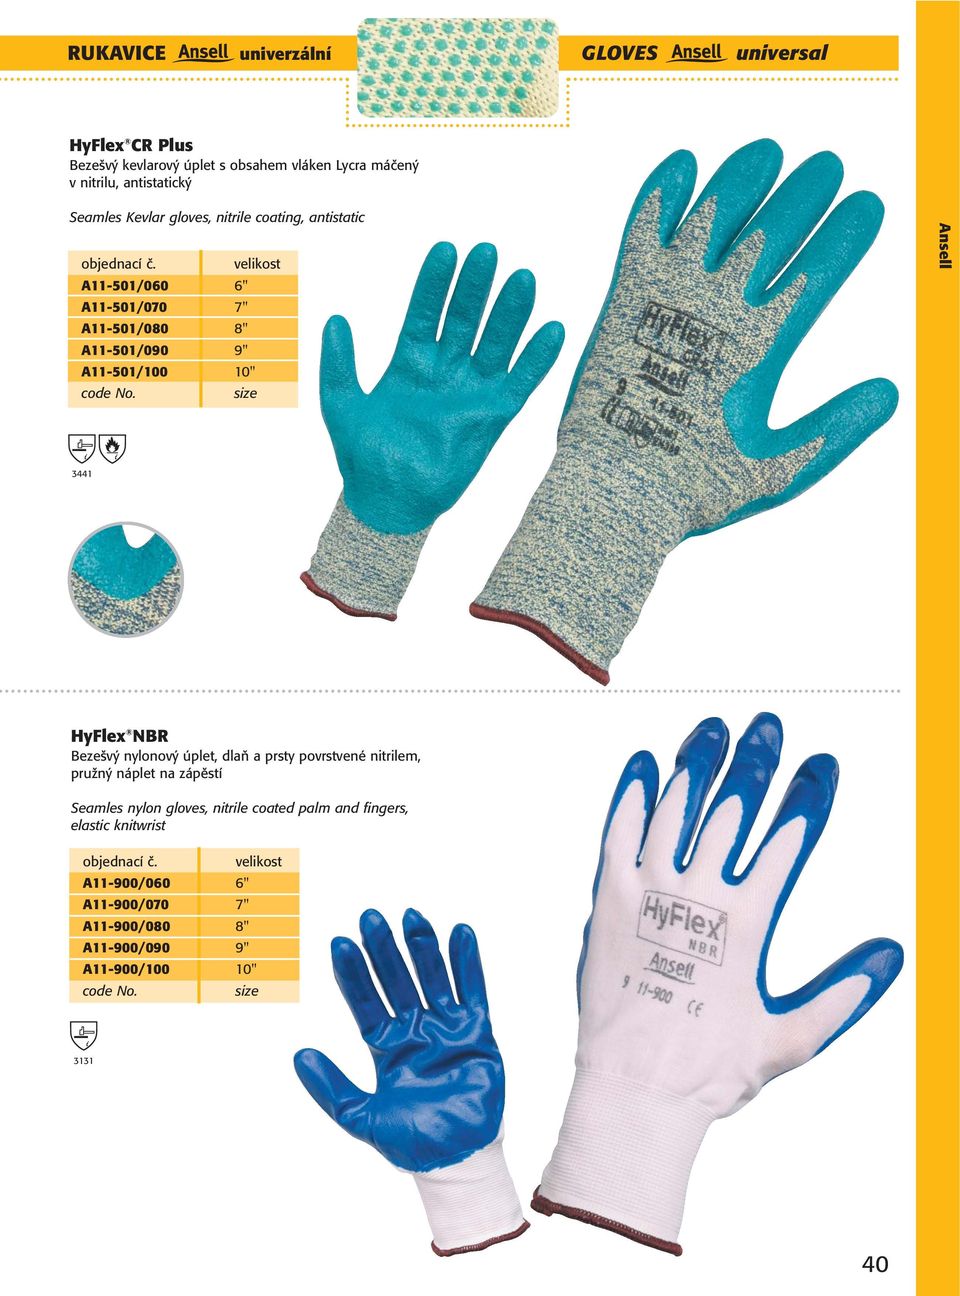 NBR Bezešvý nylonový úplet, dlaň a prsty povrstvené nitrilem, pružný náplet na zápěstí Seamles nylon gloves, nitrile